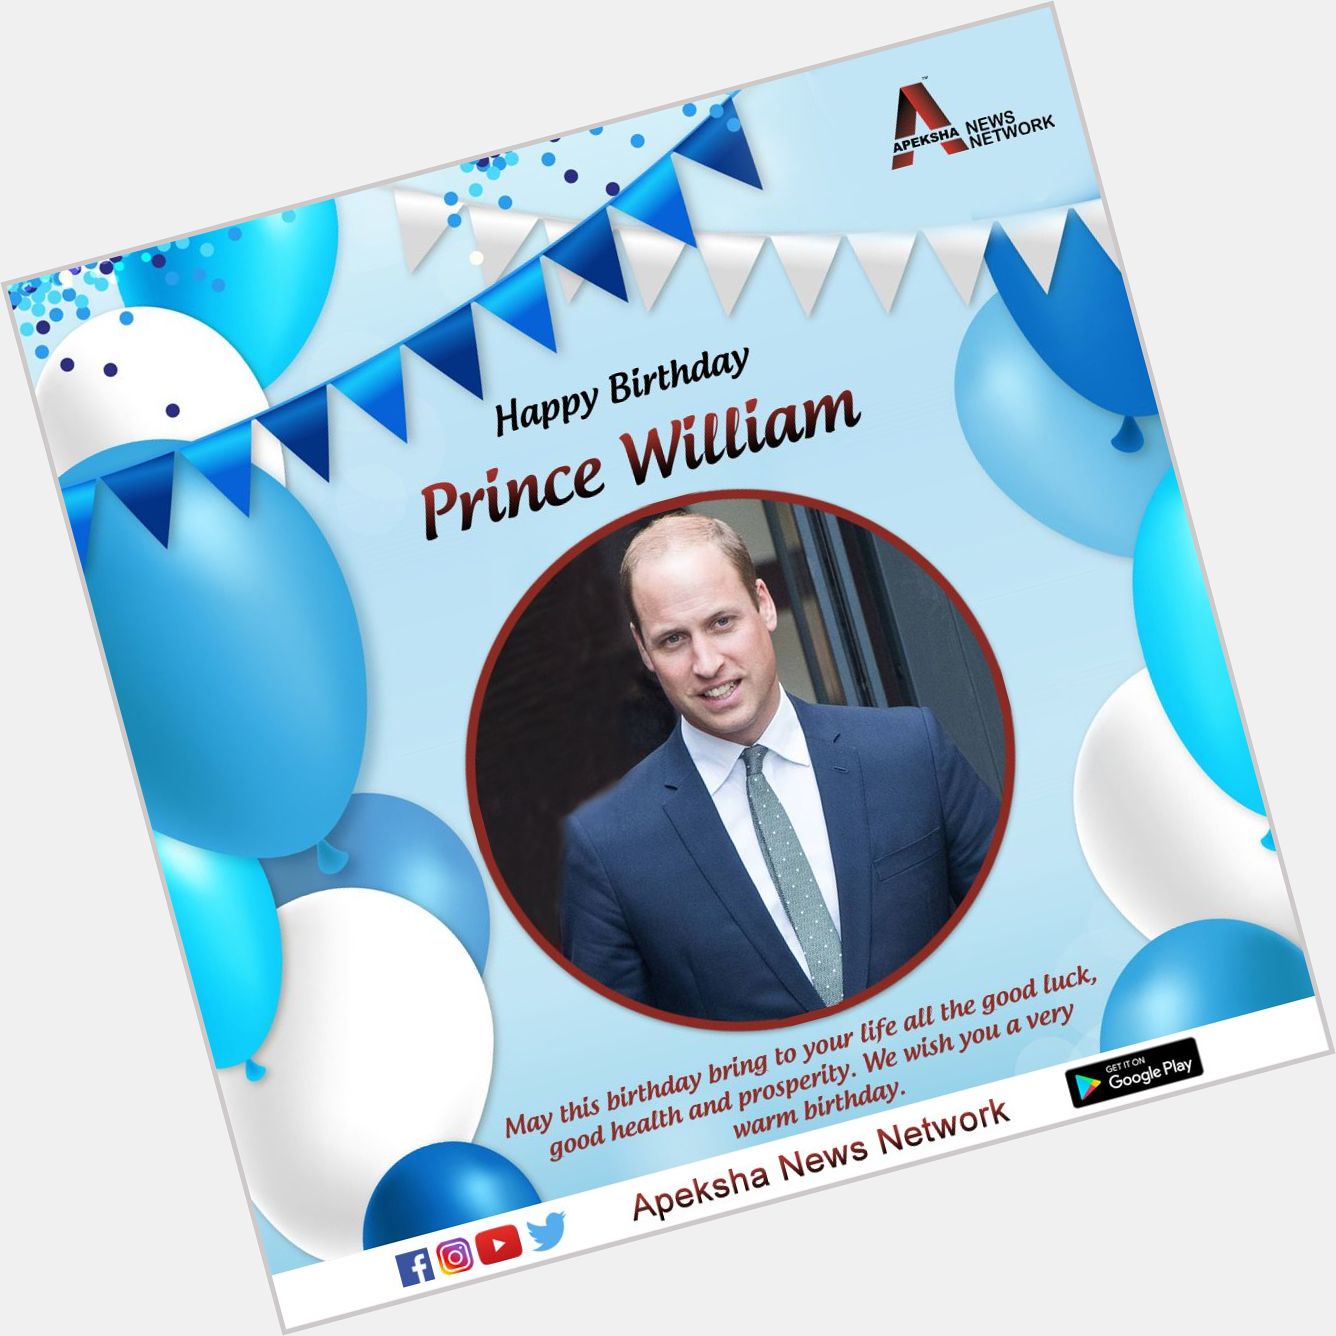 Happy Birthday, Prince William.  